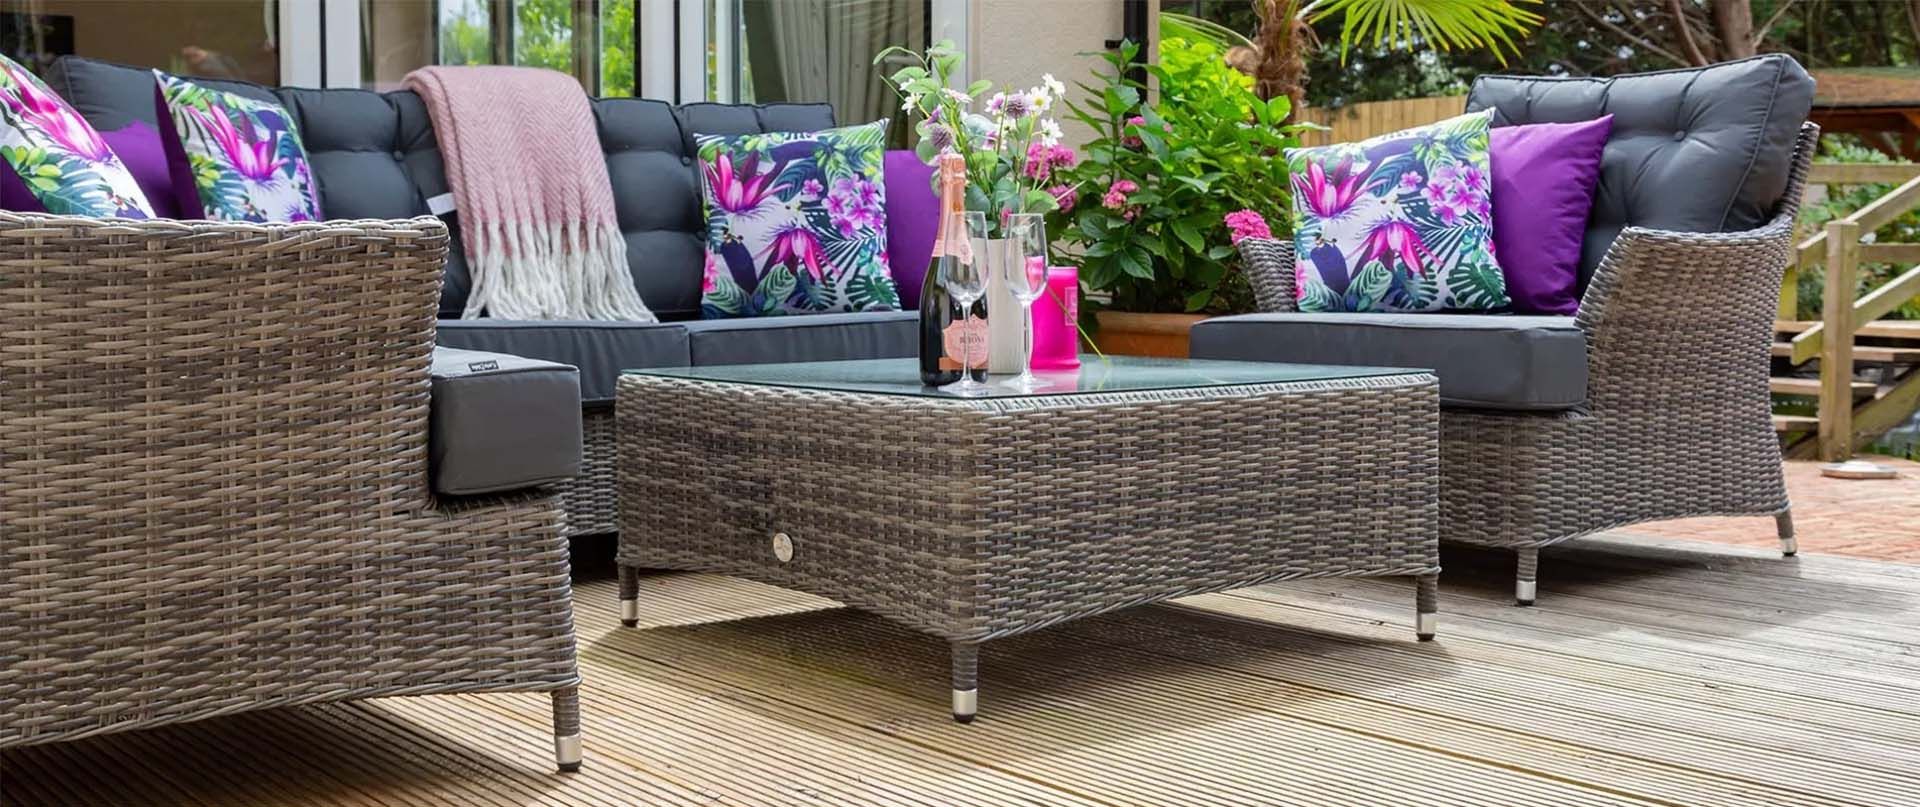 Katie Blake Furniture Outdoor Garden Sofa Sets